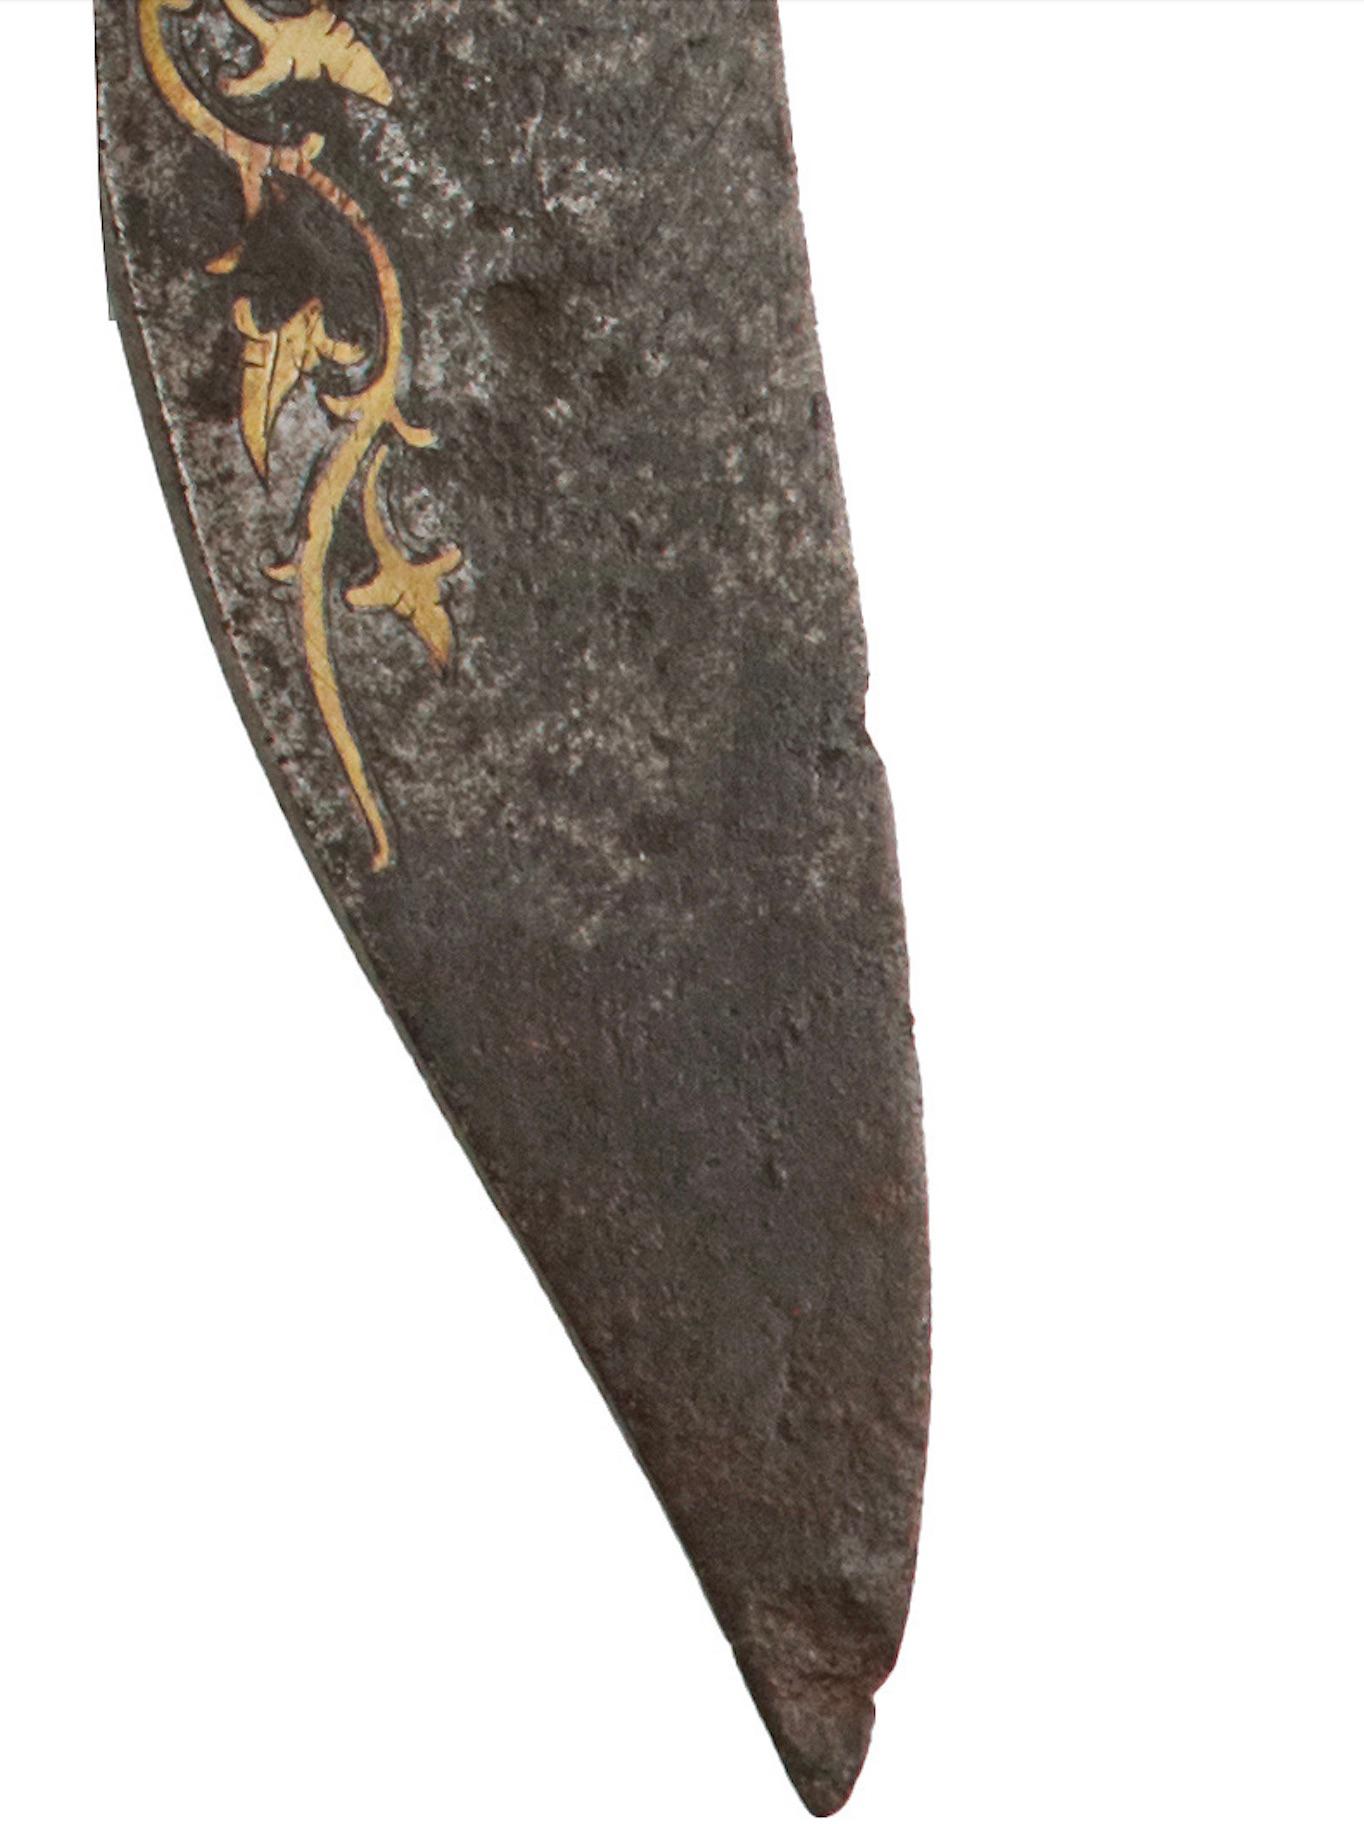 Metal A Sinhalese silver and gold Sinhalese piha-kaetta dagger, 18th century